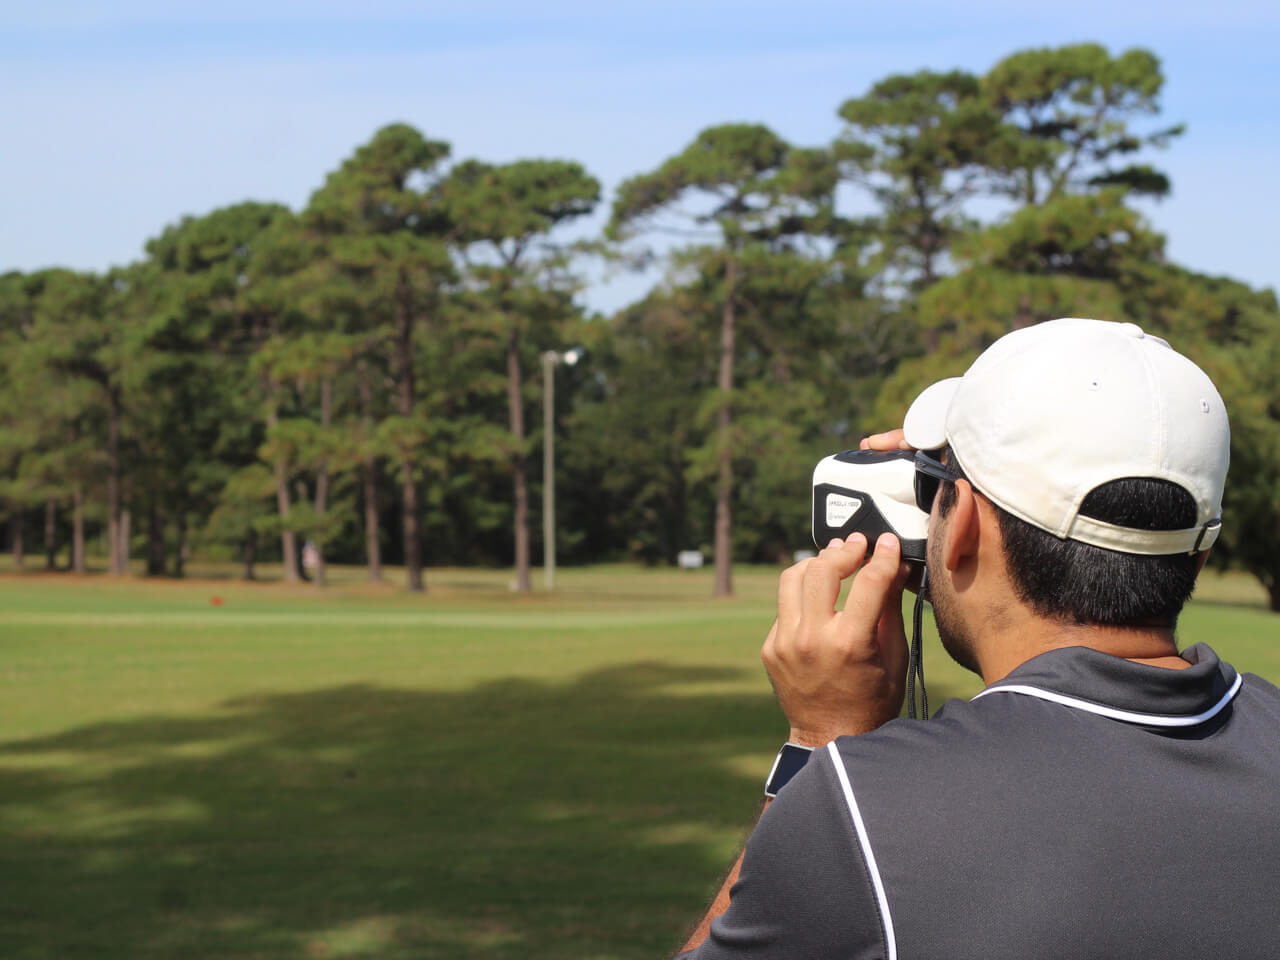 Make your game better with best golf rangefinder - Digital World Economy